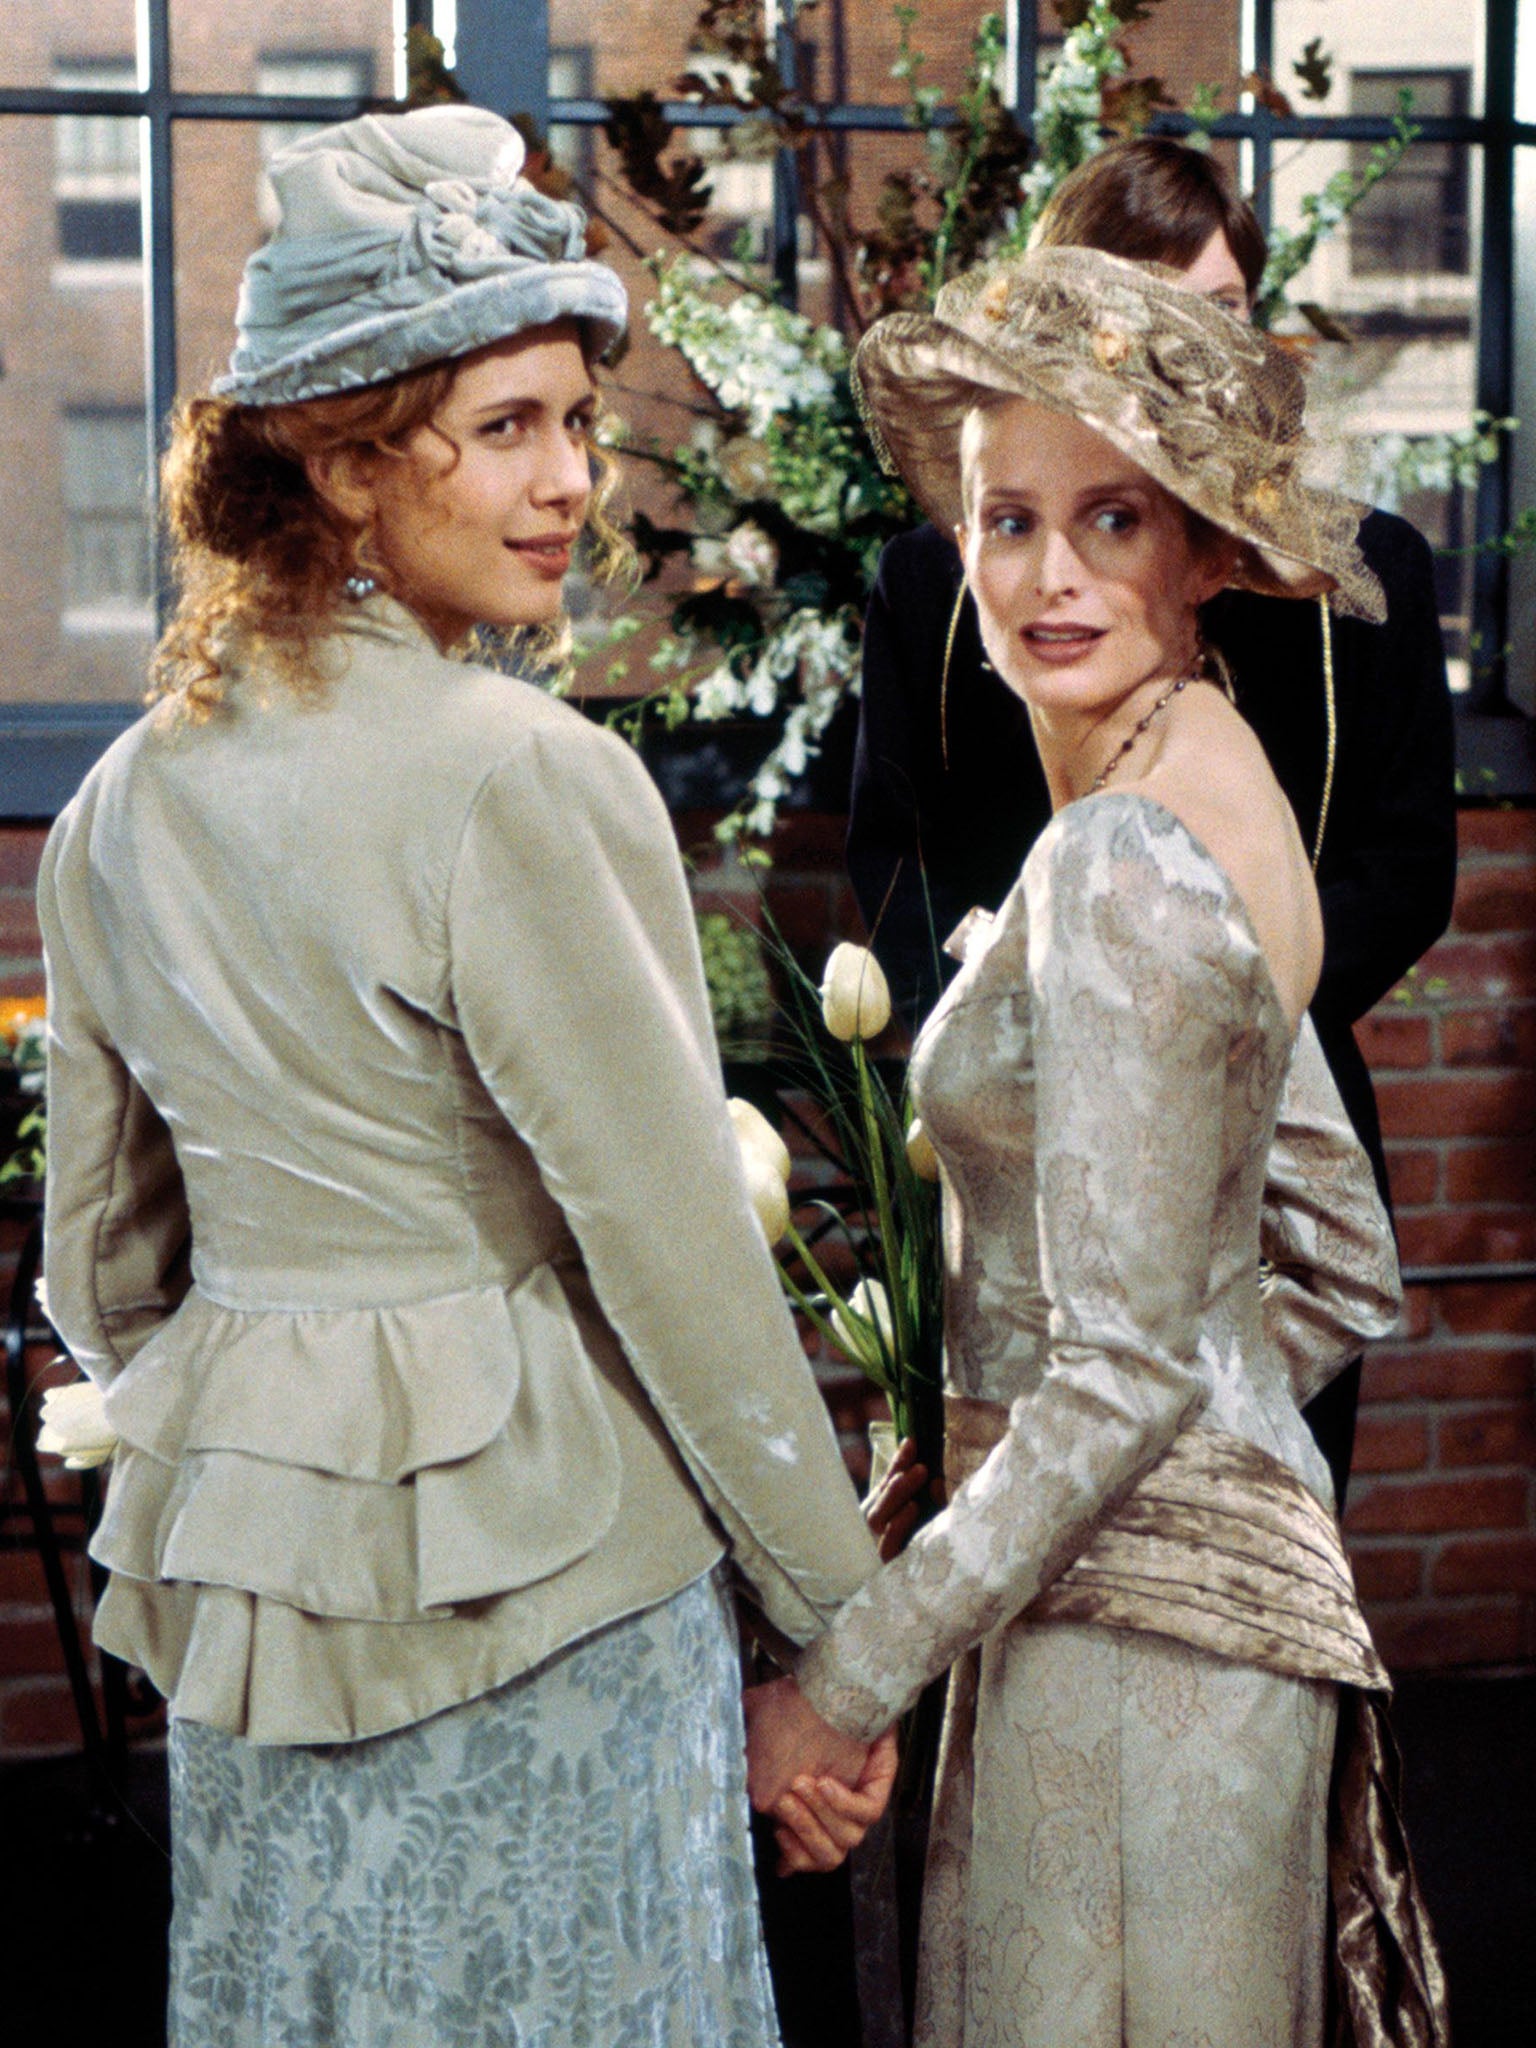 20. Carol and Susan's wedding on Friends (1996)